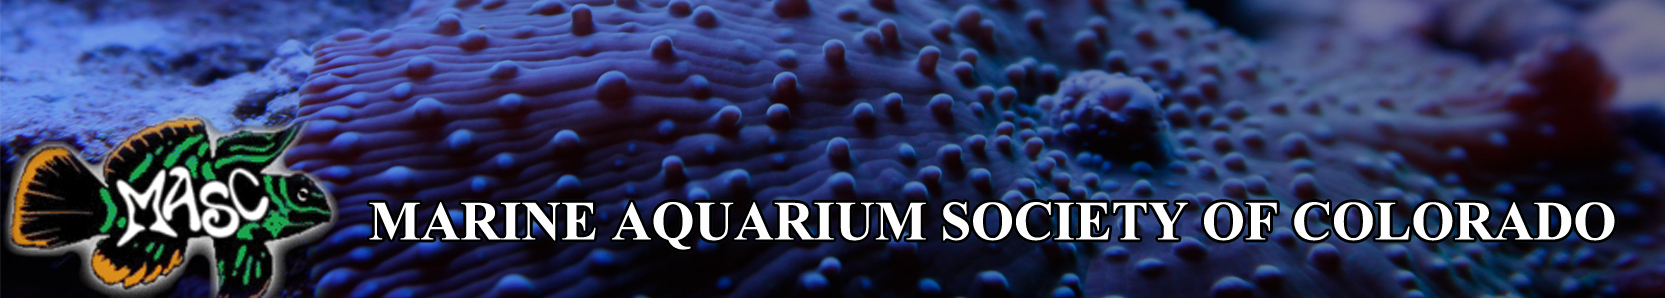 Marine Aquarium Society of Colorado